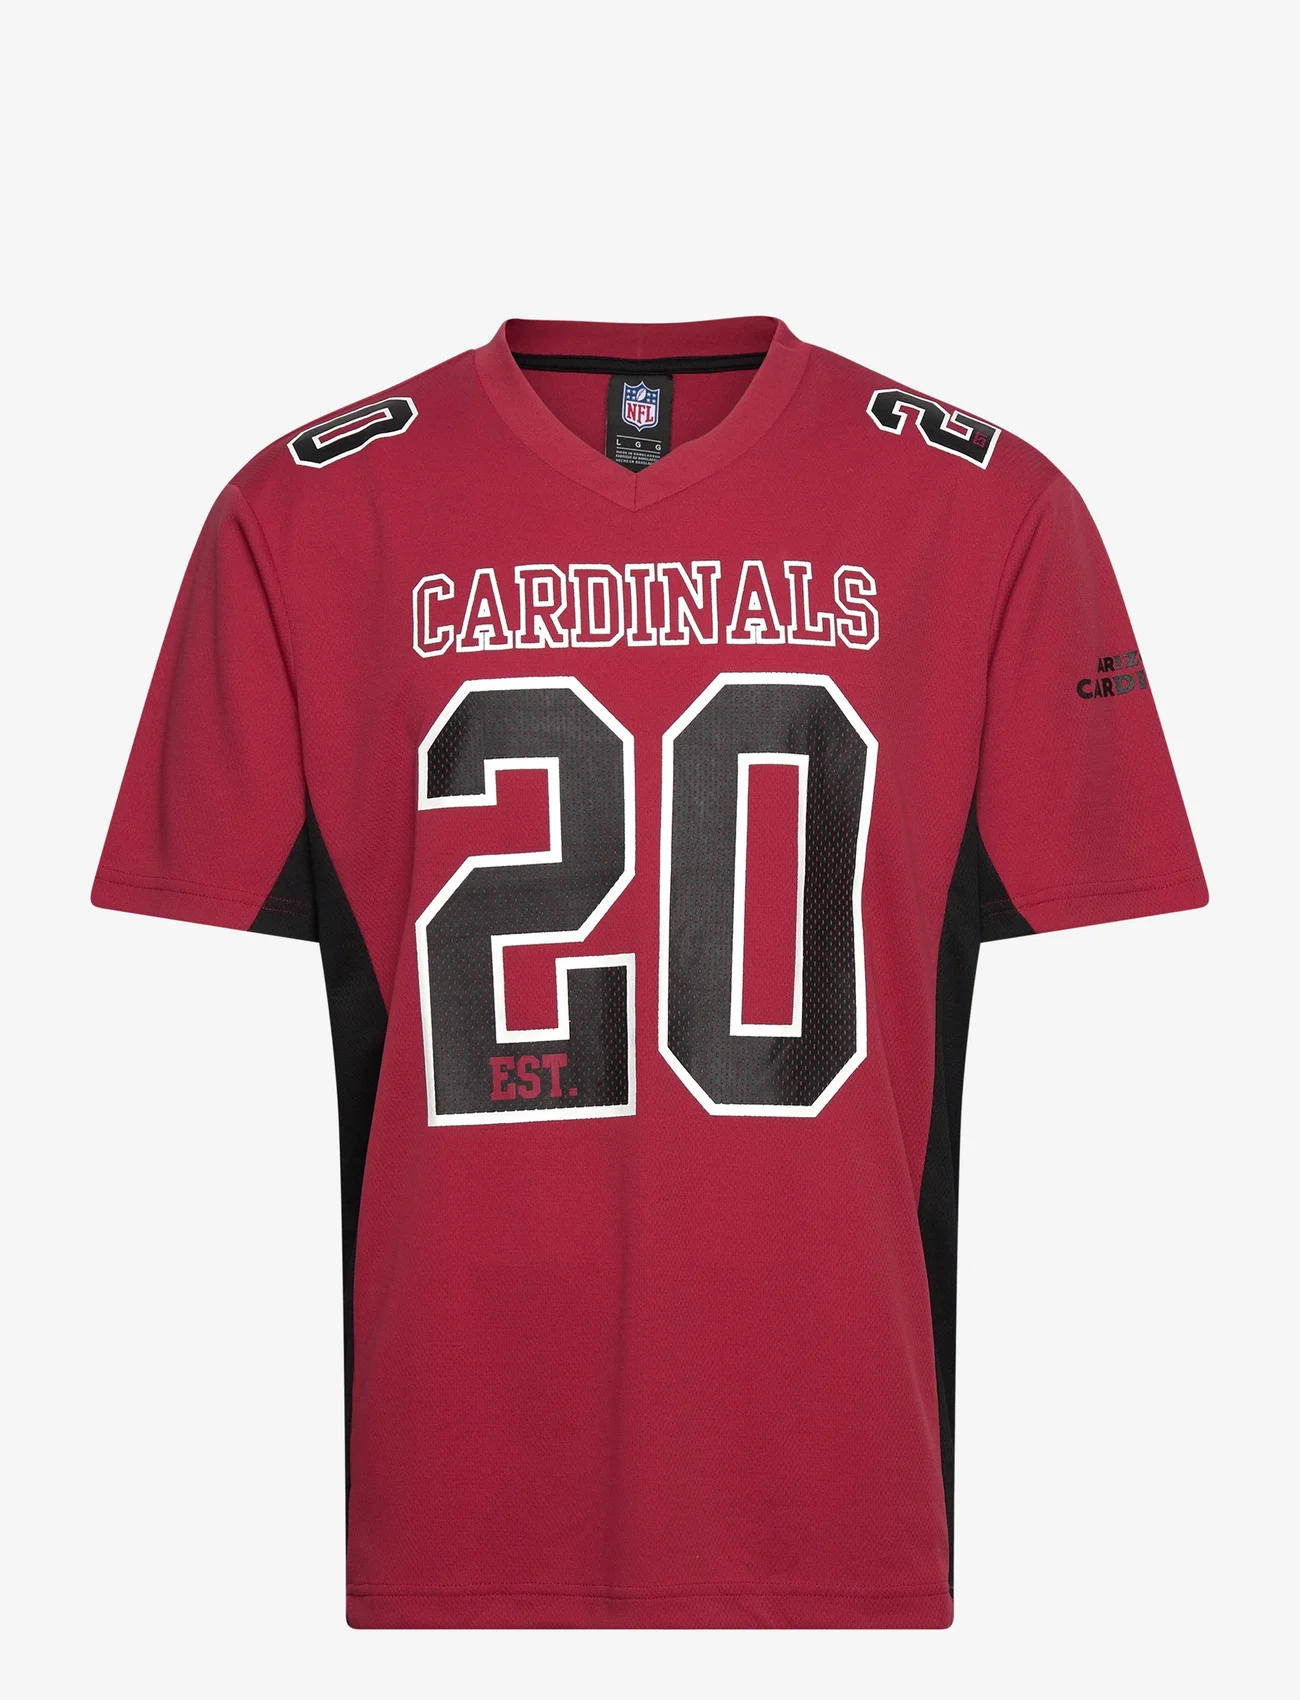 Fanatics - Arizona Cardinals NFL Value Franchise Fashion Top - short-sleeved t-shirts - bright garnet,black - 0